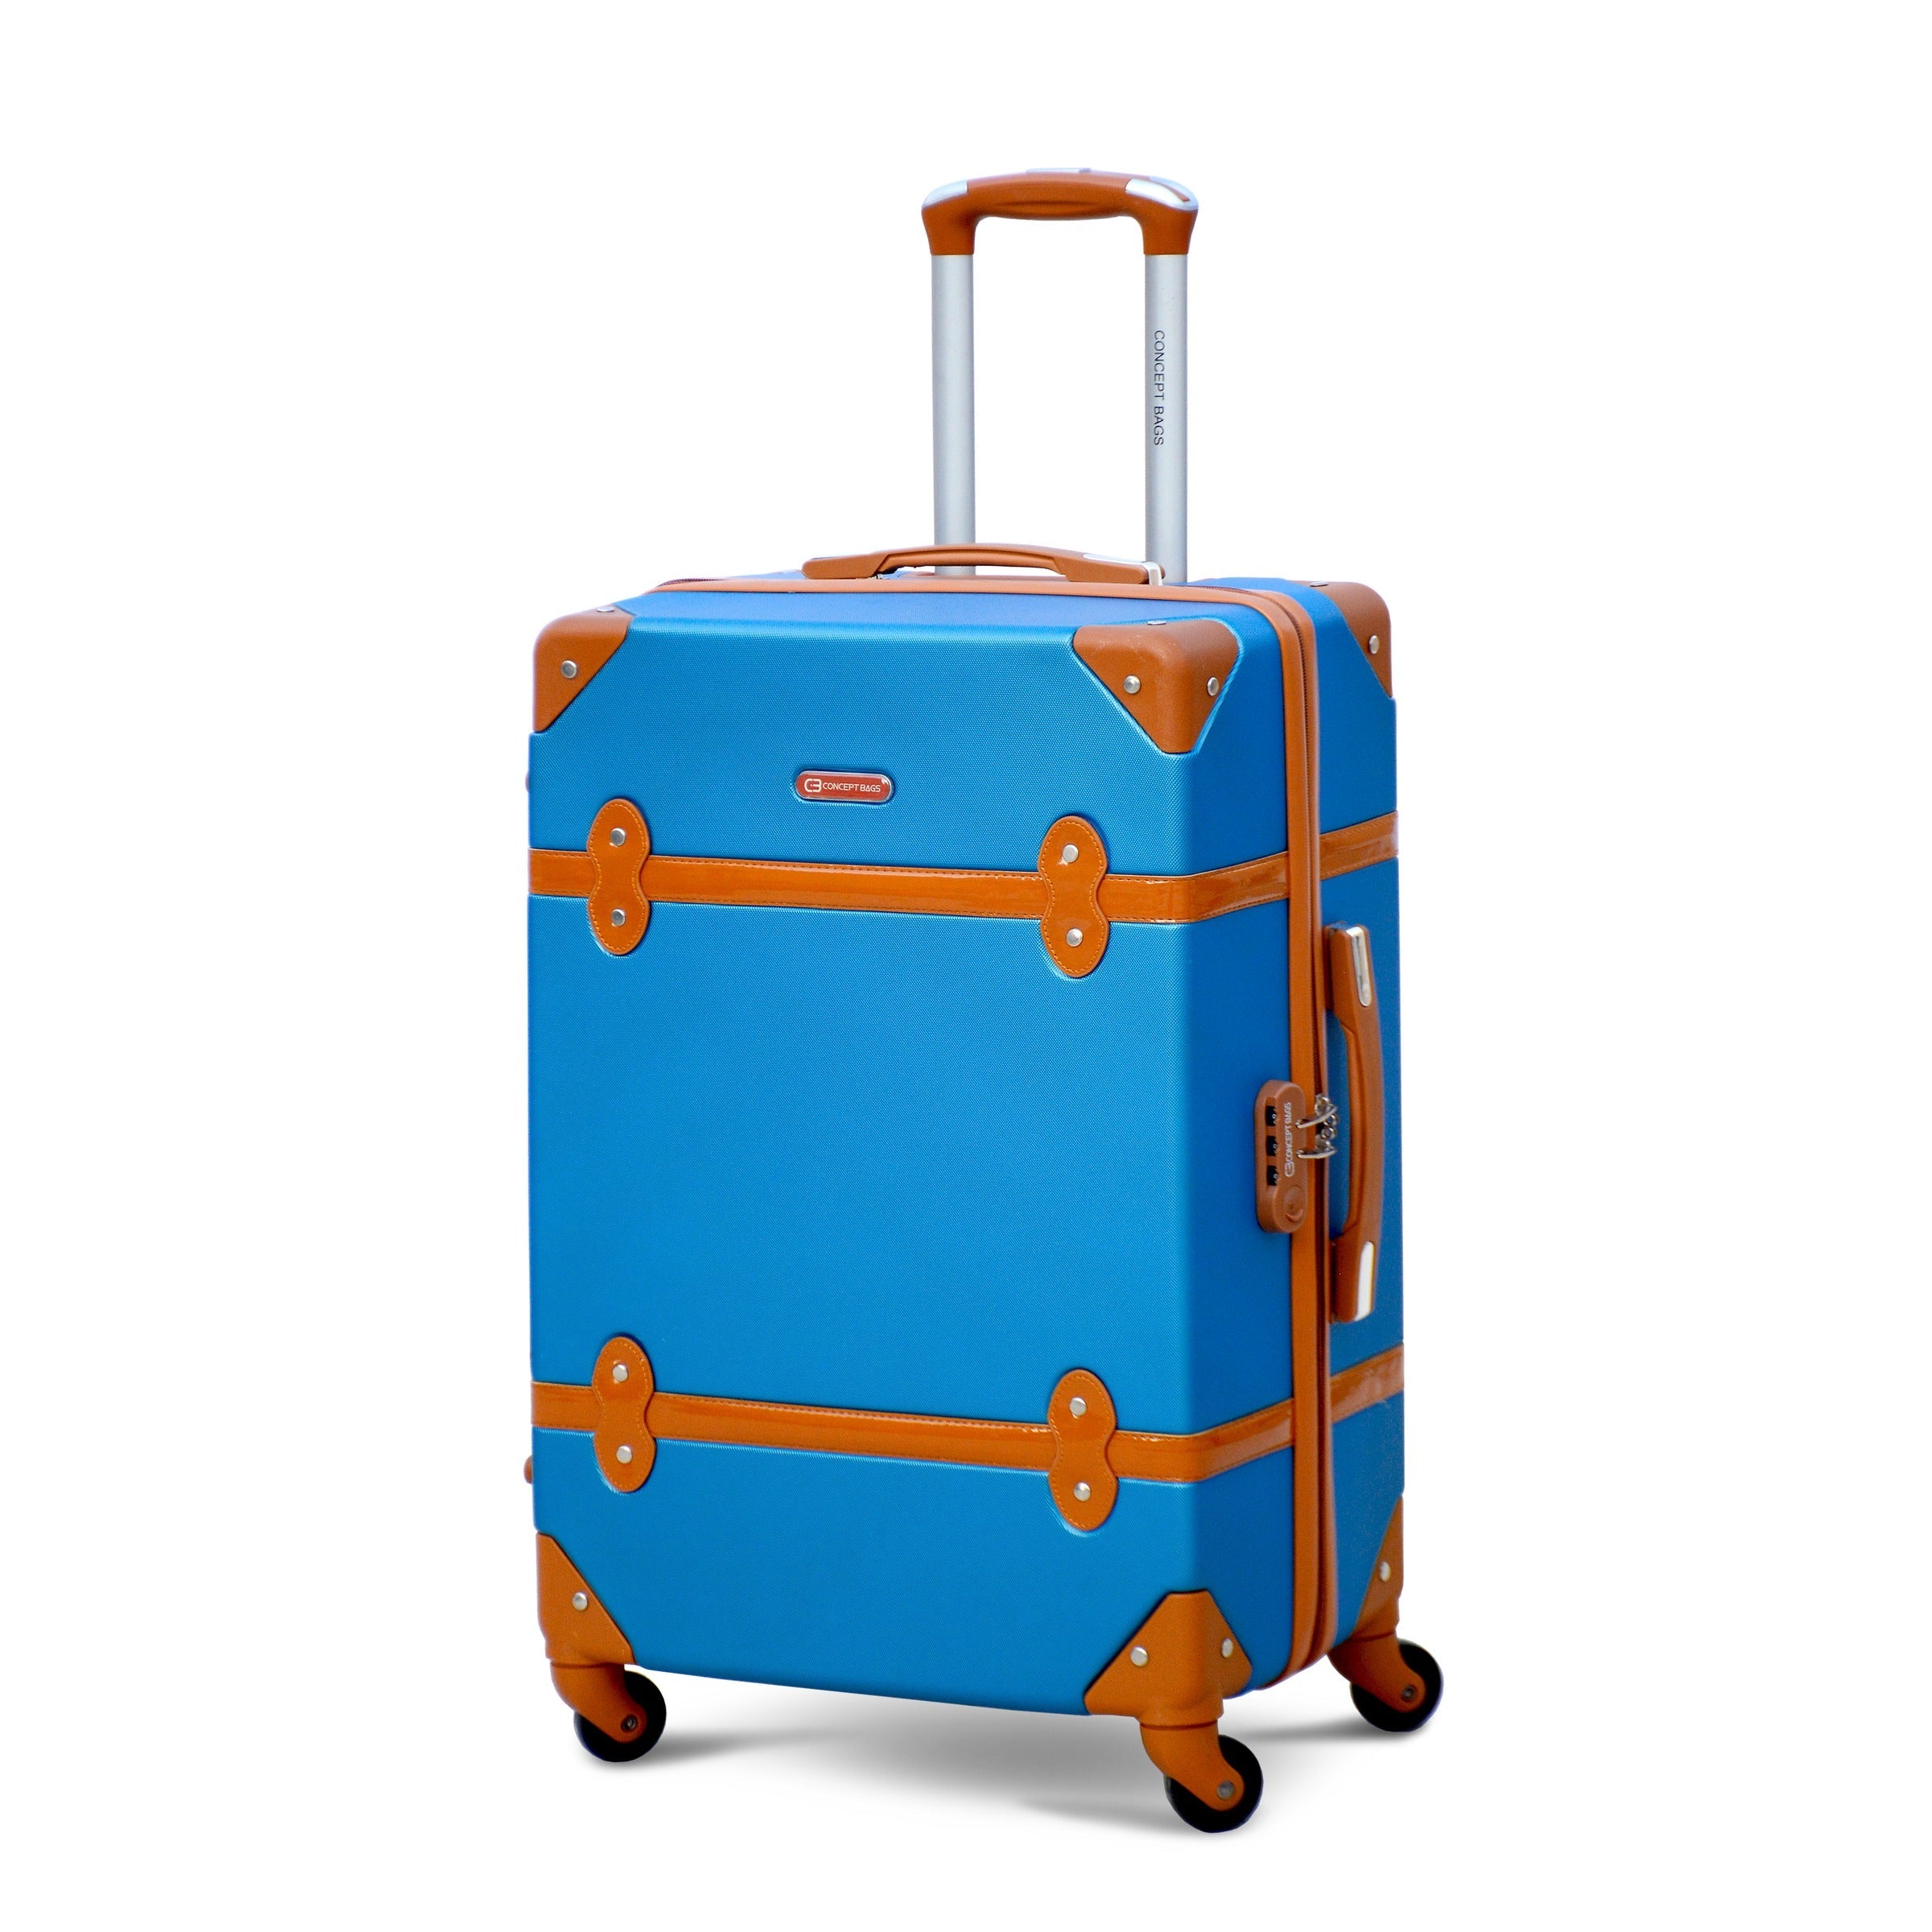 28" Blue Lightweight Corner Guard ABS Luggage Hard Case Trolley Bag